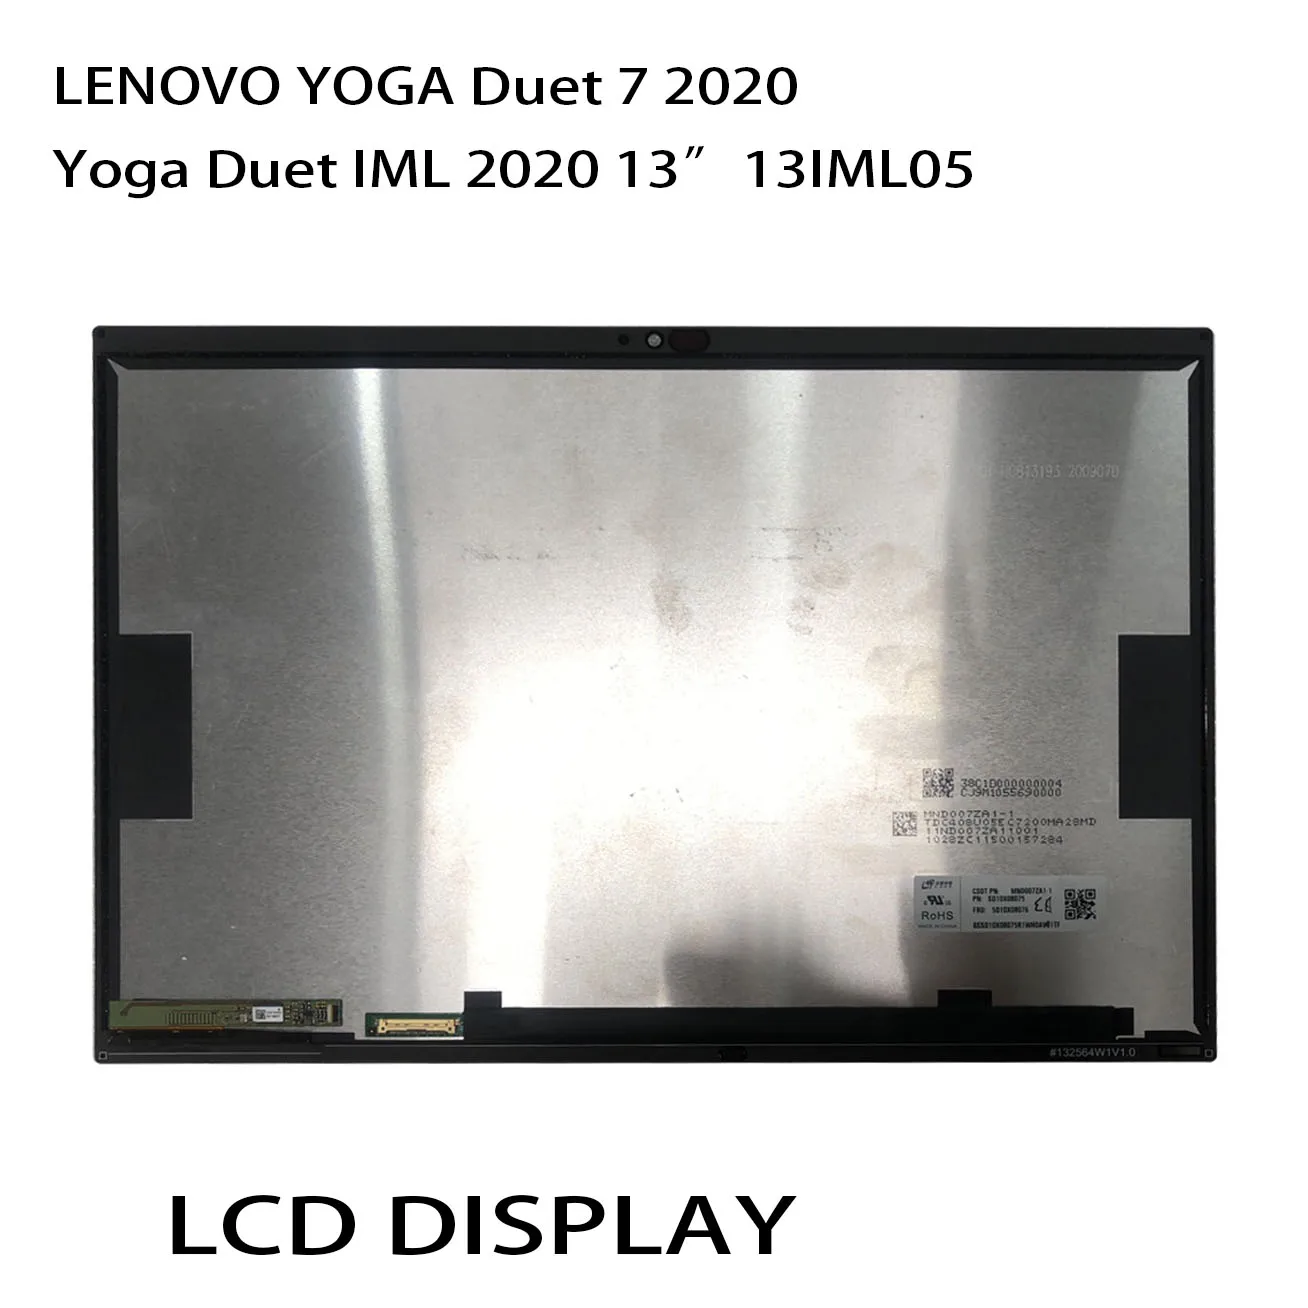 Uus Originaal LCD LENOVO JOOGA Duett 7 2020. Aasta Jooga Duett IML 2020 13